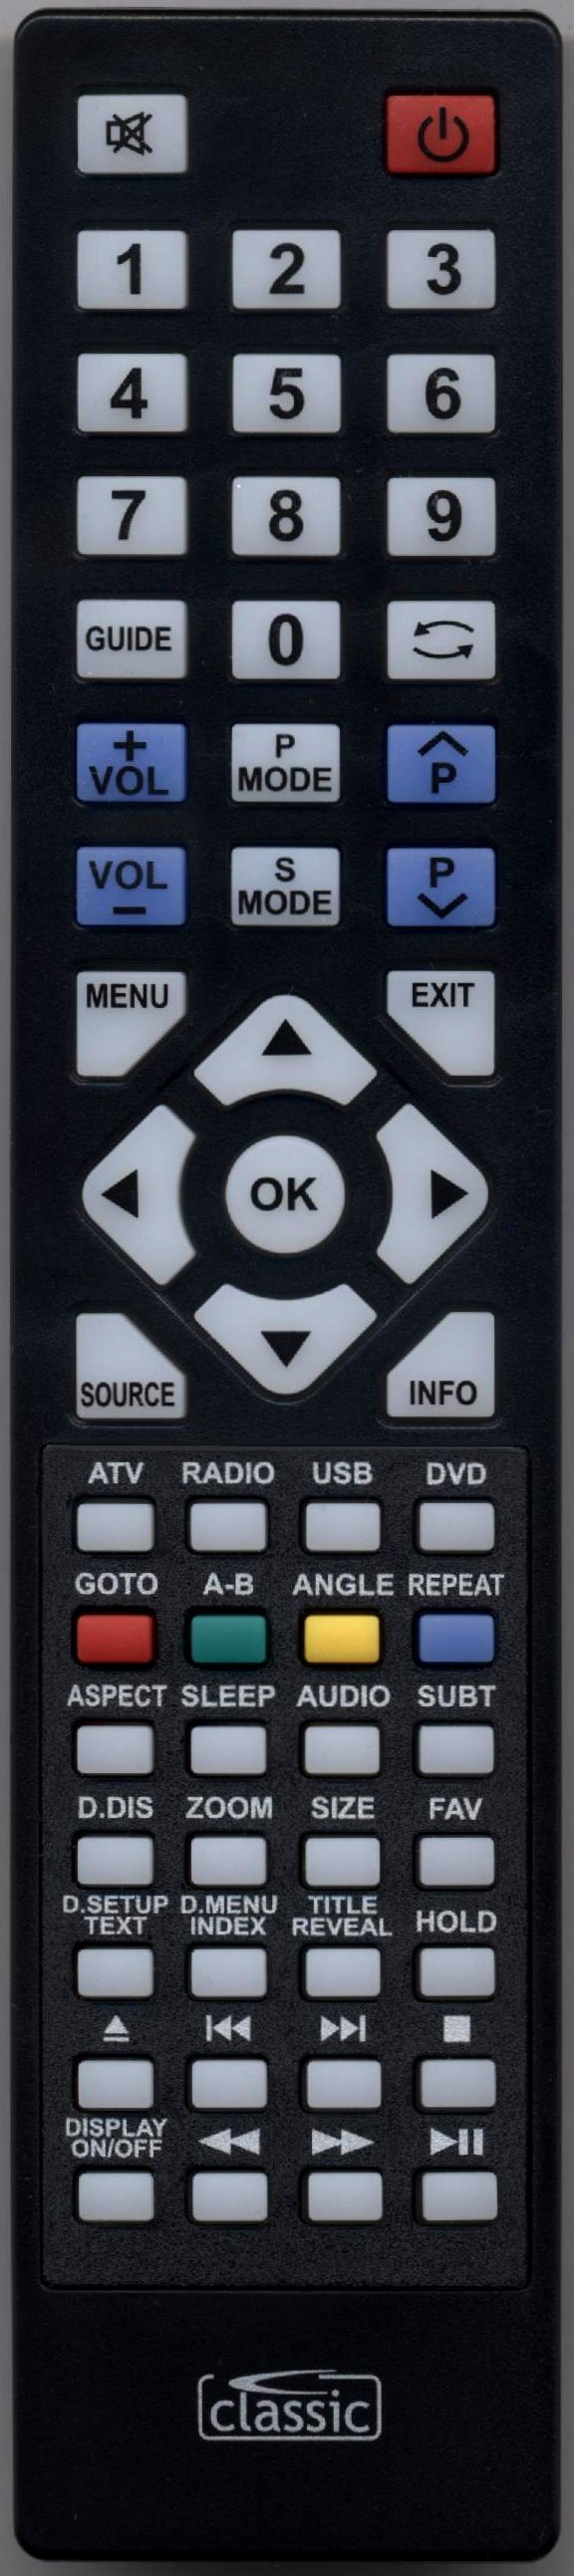 UMC - W21655G Alternative Remote Control